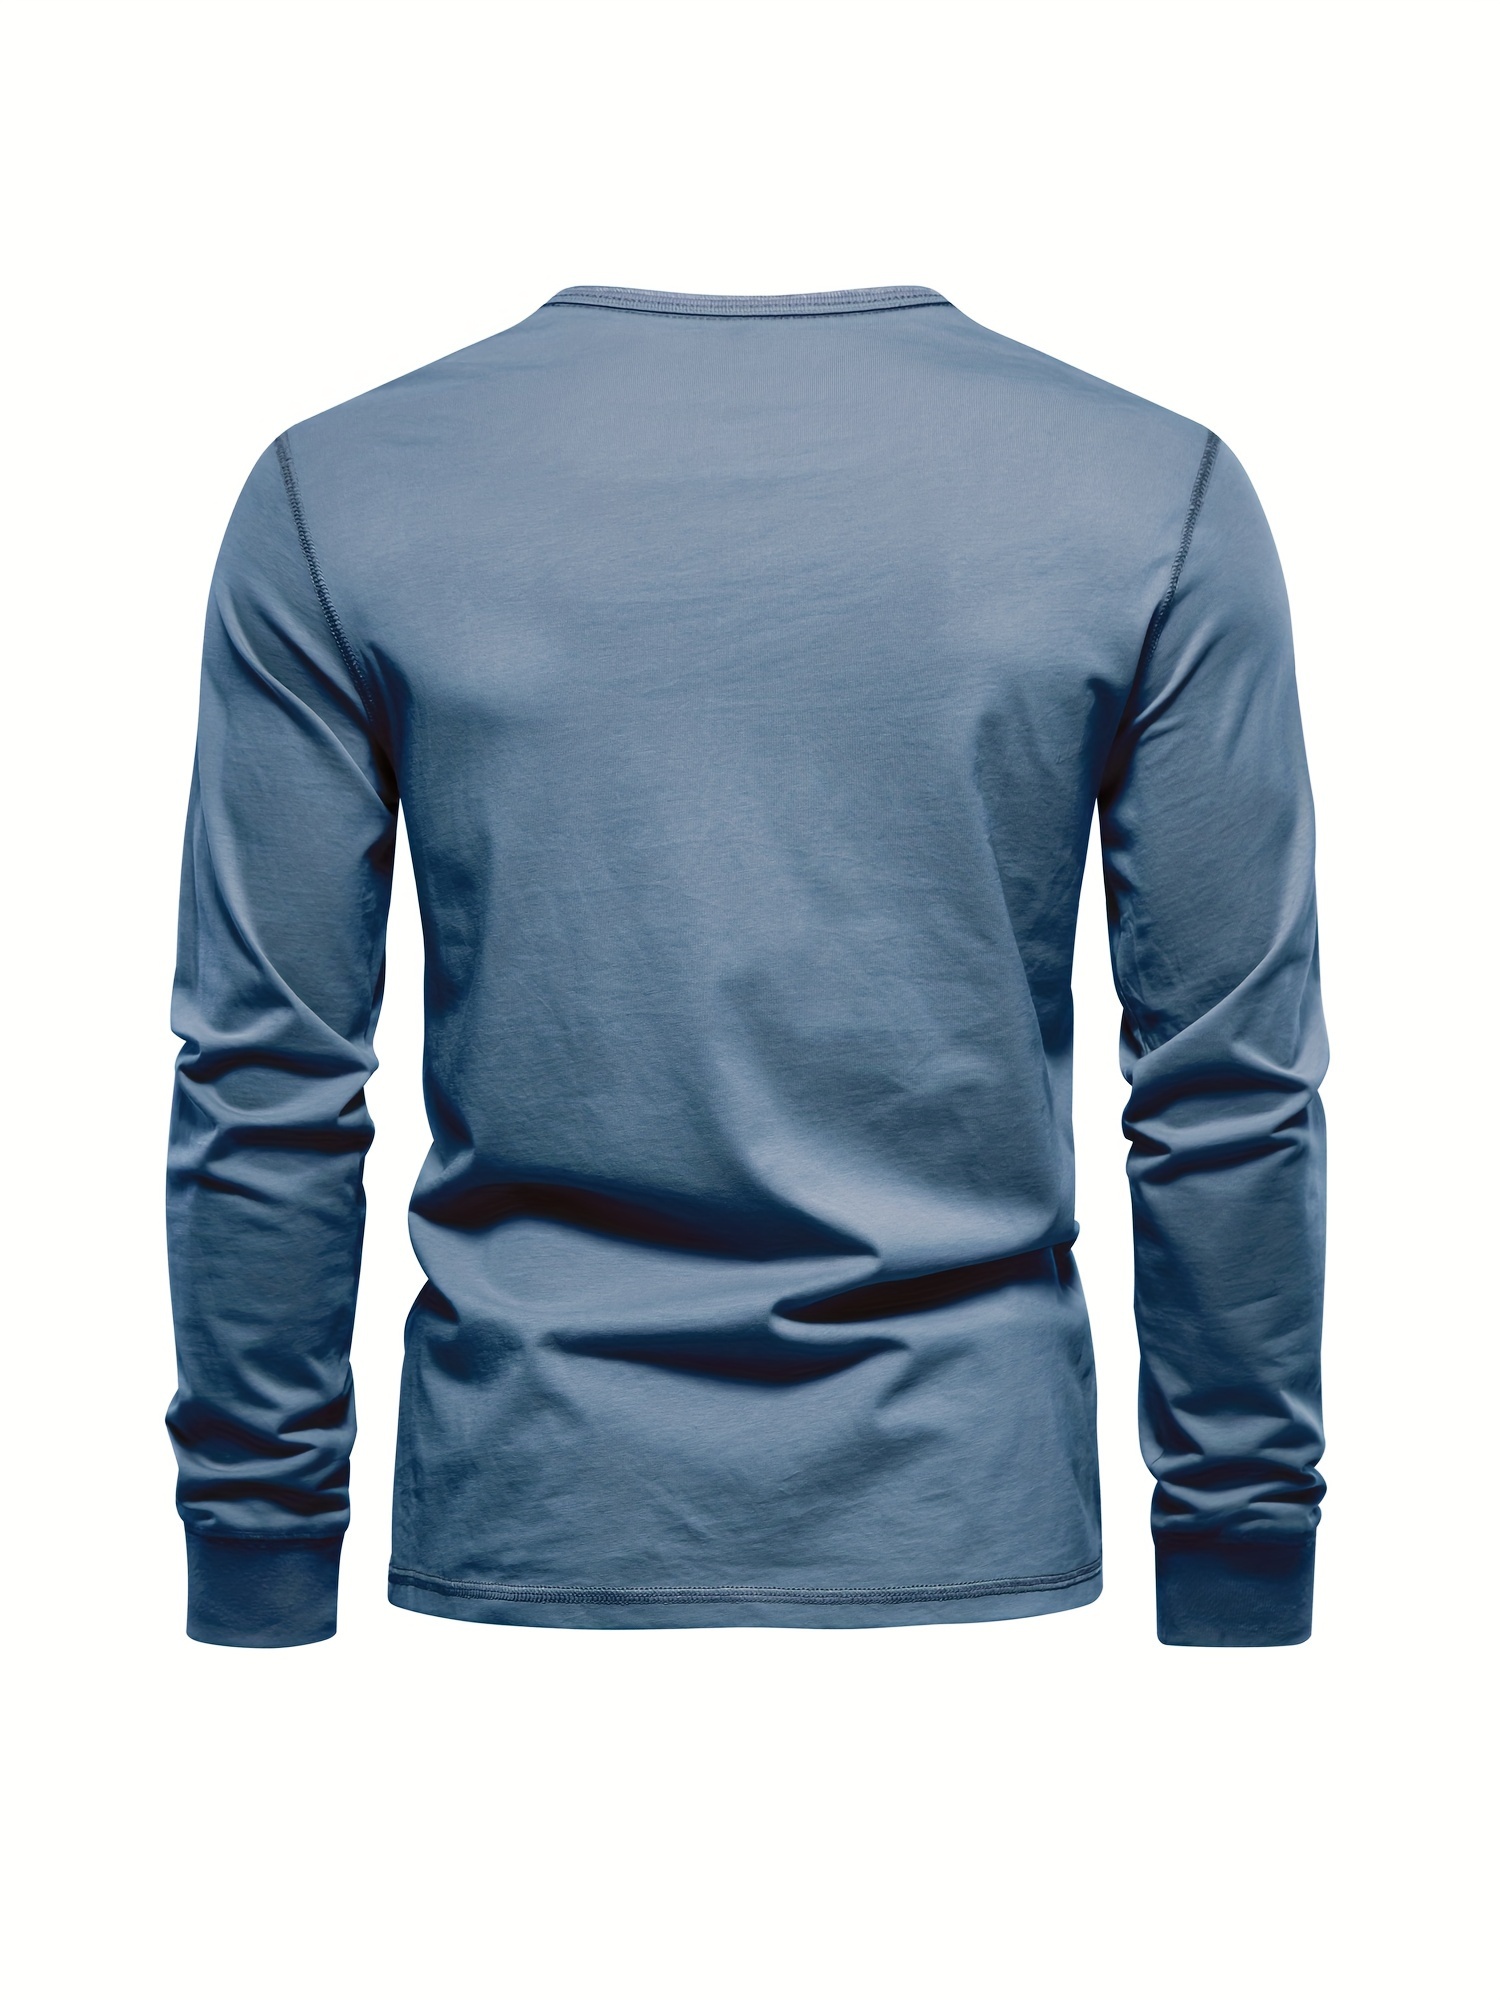 Aueoeo Long Sleeve Work Shirts for Men, Men's Baggy Henley T-Shirt